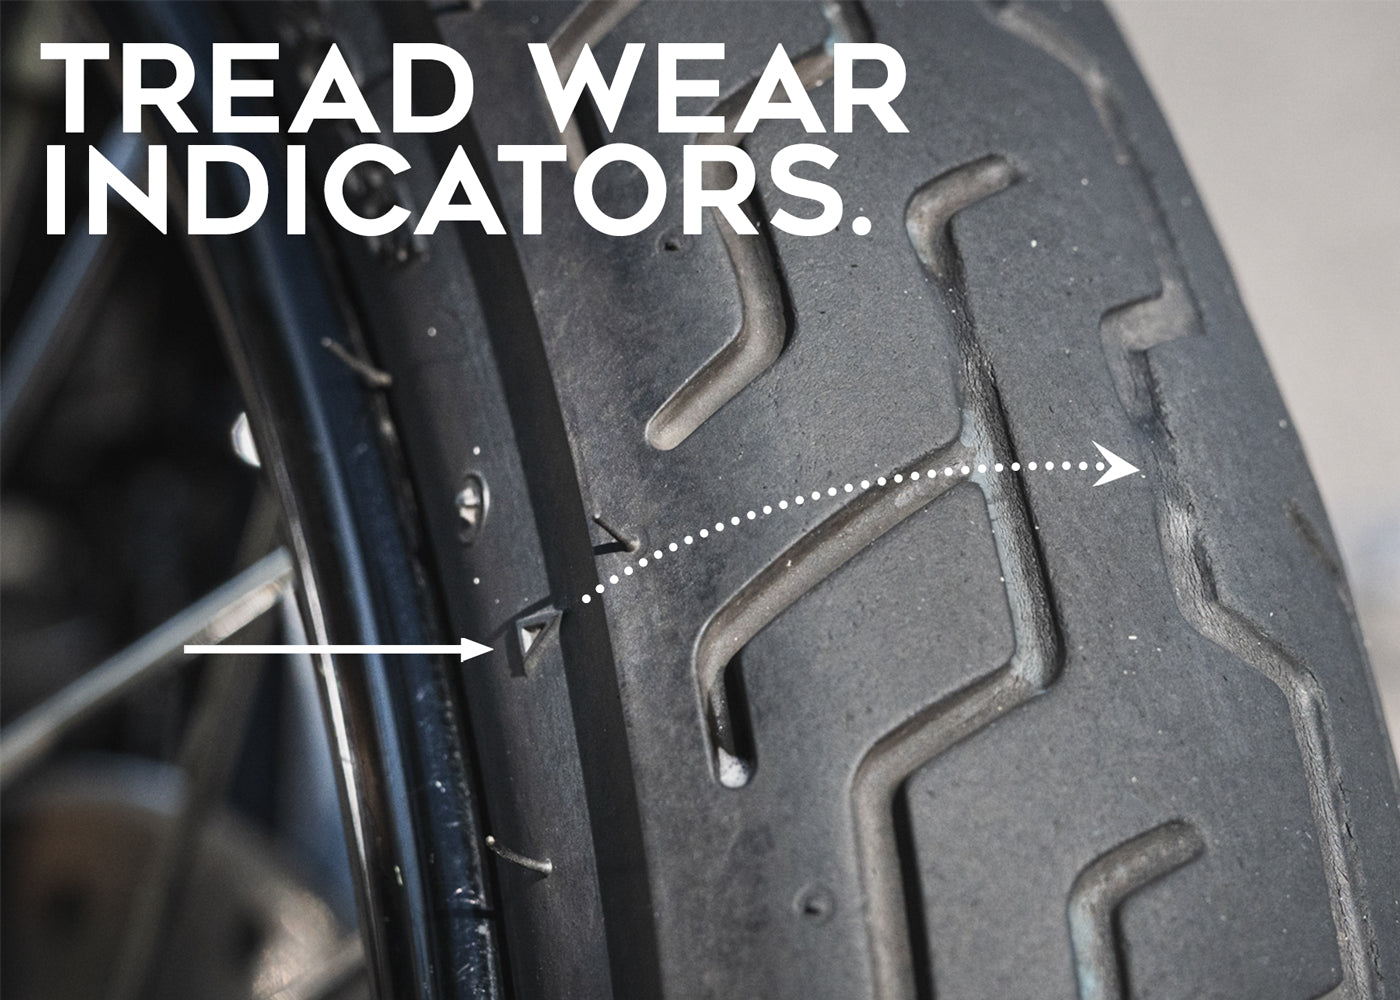 tread wear indicators